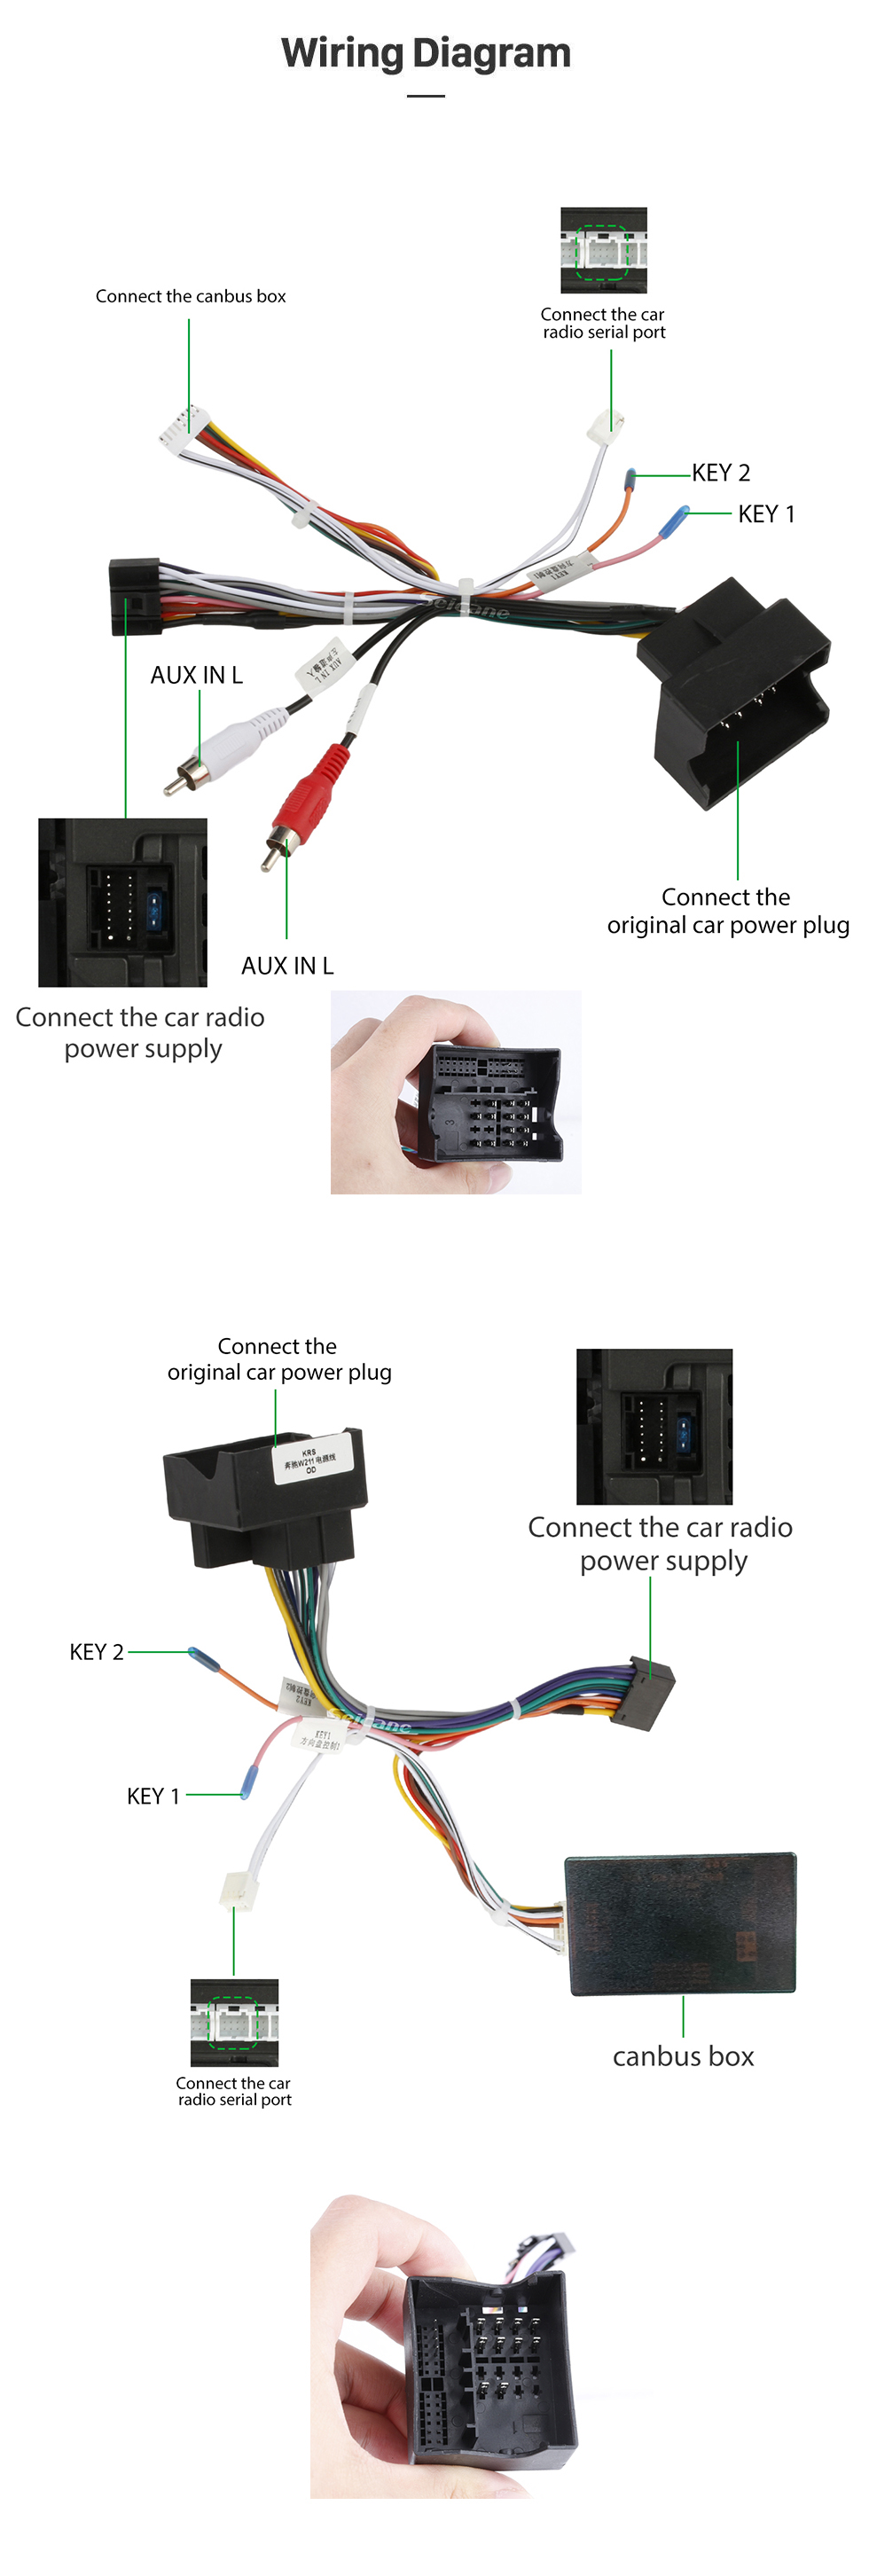 Seicane HD Touchscreen 9 inch Android 13.0 For 2000 2001 2002-2011 Mercedes SLK Class R171 SLK200 SLK280 SLK300 SLK350 SLK55 Radio GPS Navigation System Bluetooth Carplay support Backup camera